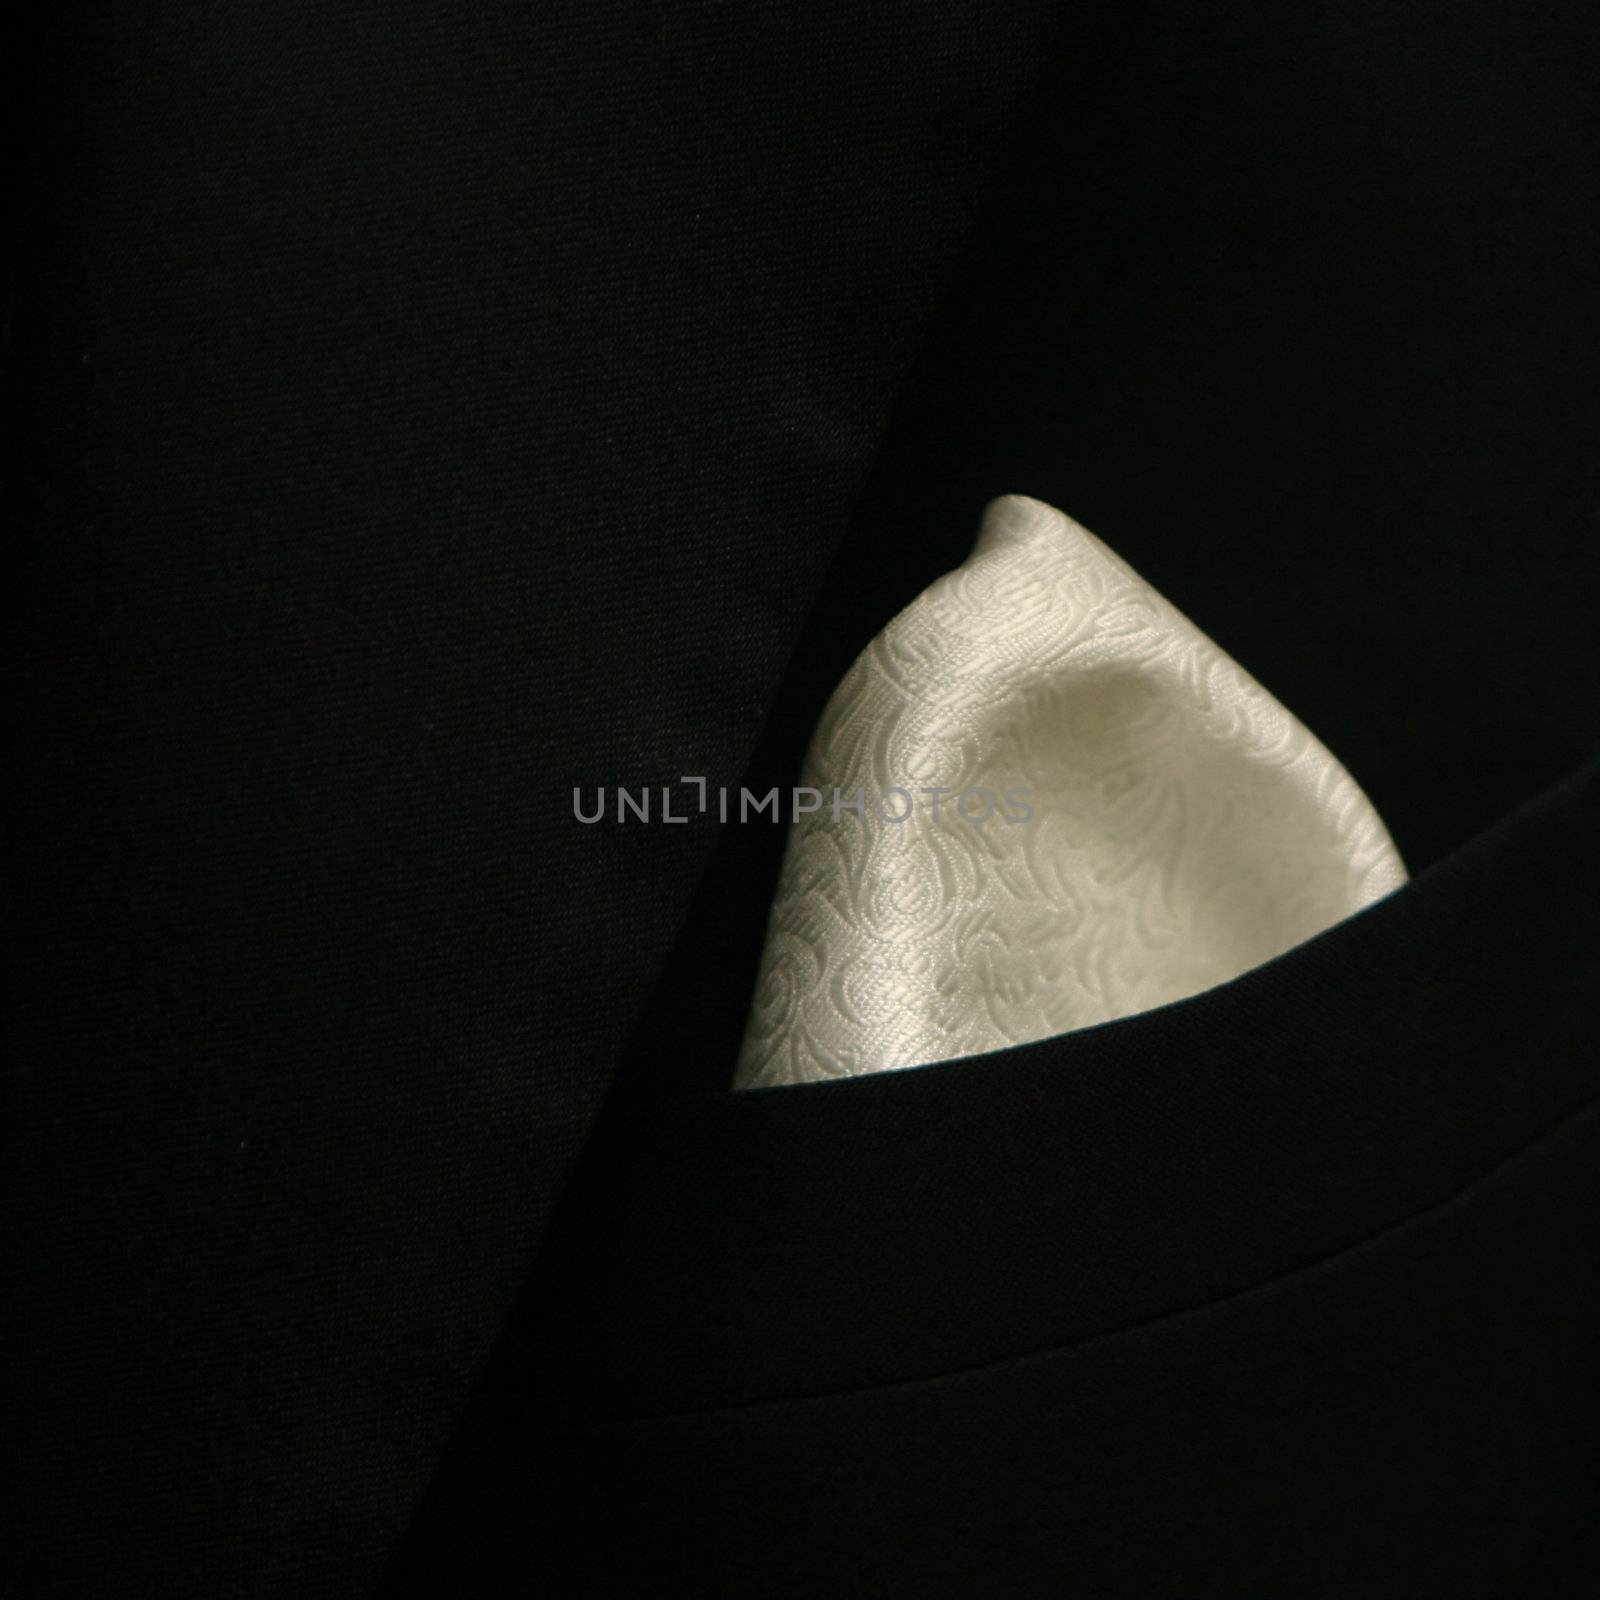 Tuxedo Pocket by fullvision